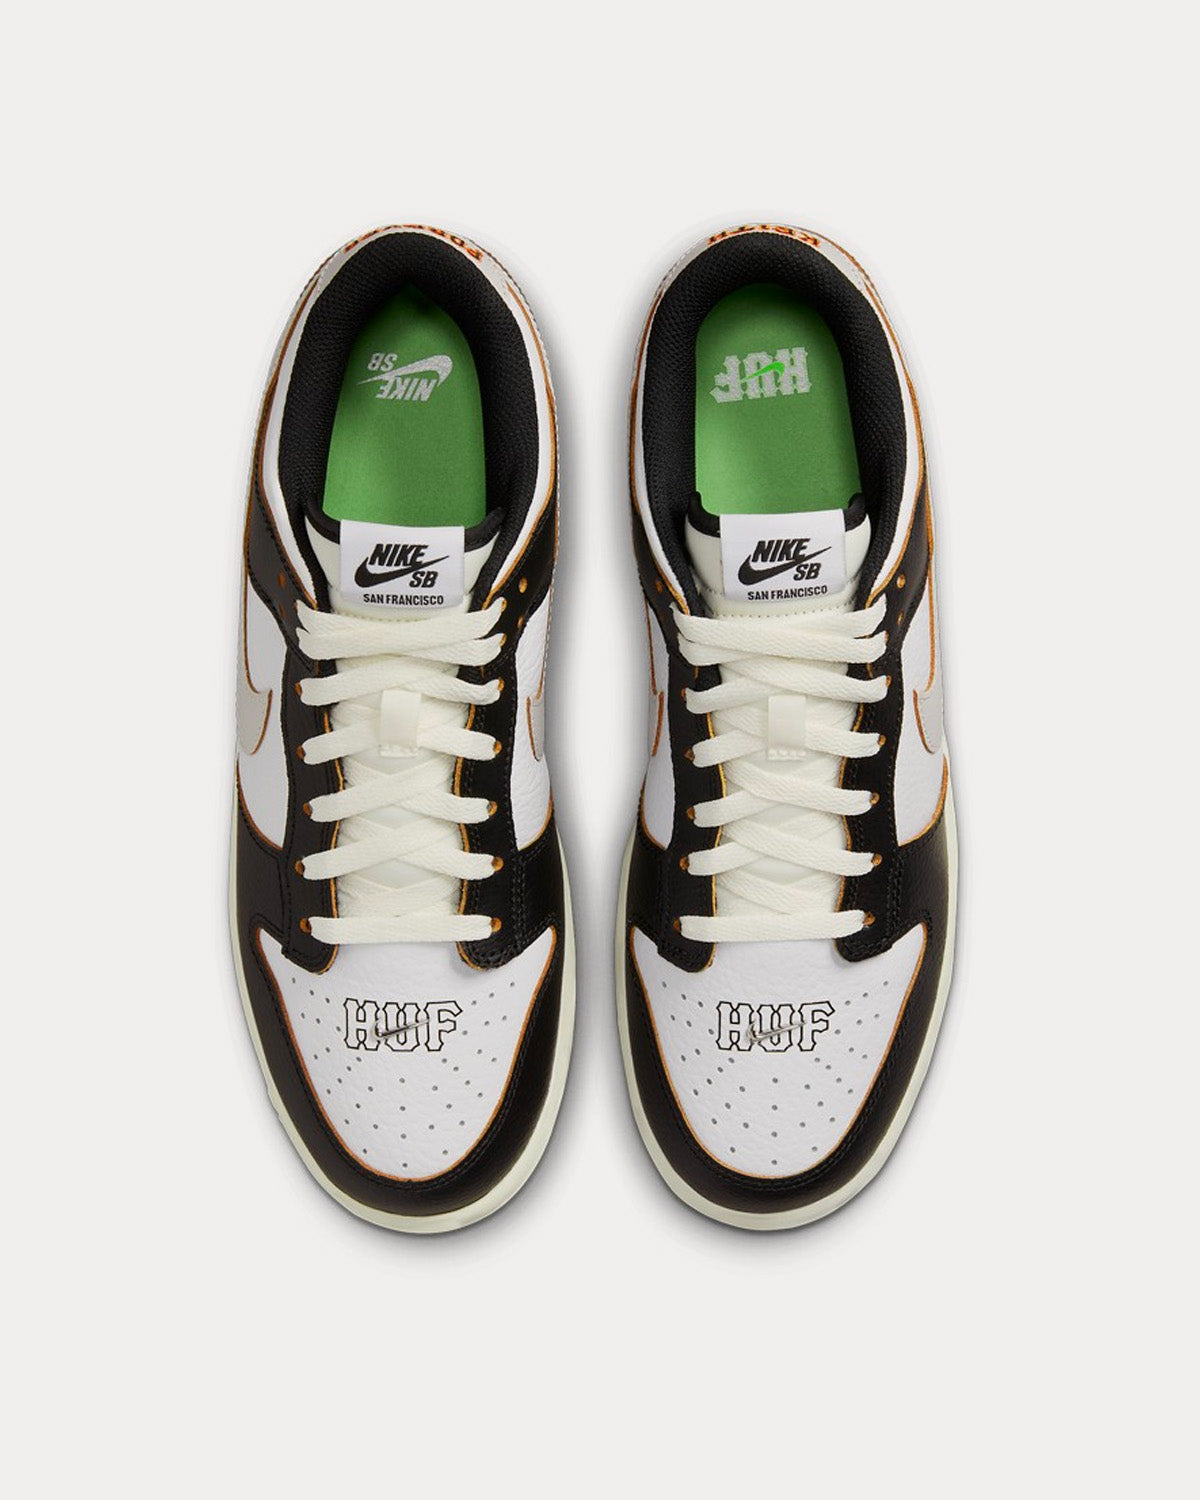 Nike x HUF SB Dunk Low 'San Francisco' Low Top Sneakers - Sneak in 